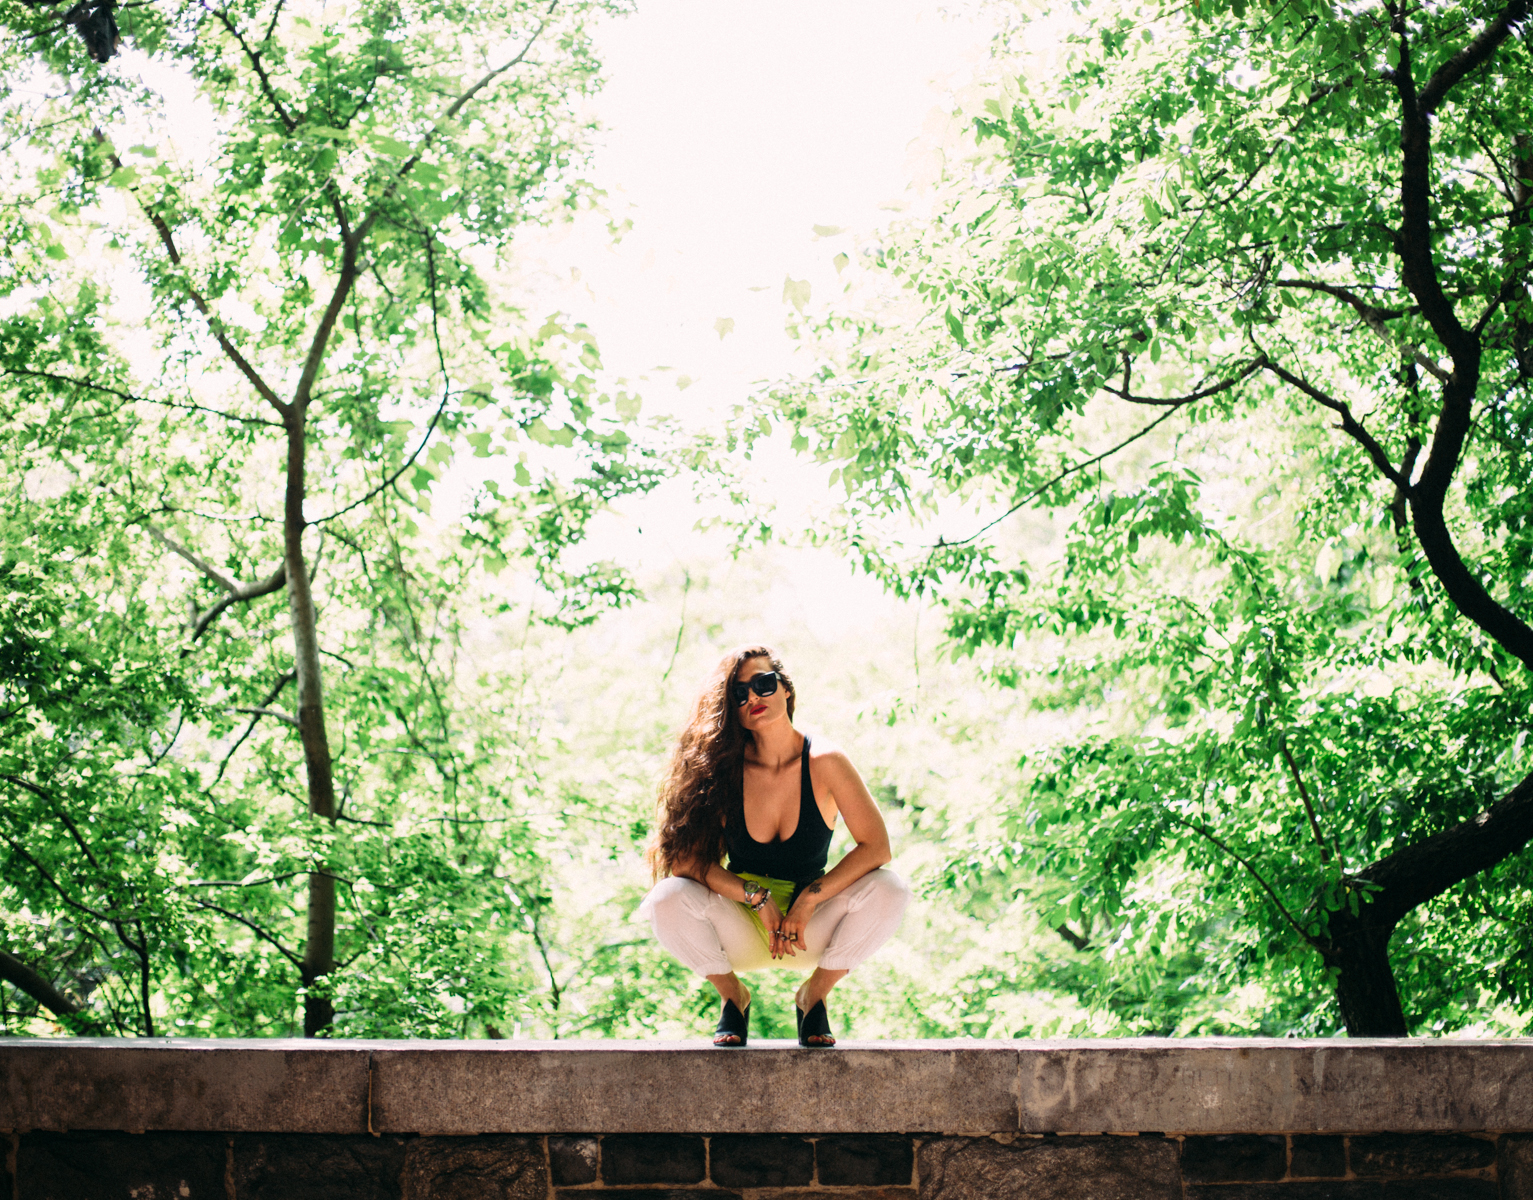 NYC New York City Girl Model Woman Photoshoot Woods Nature